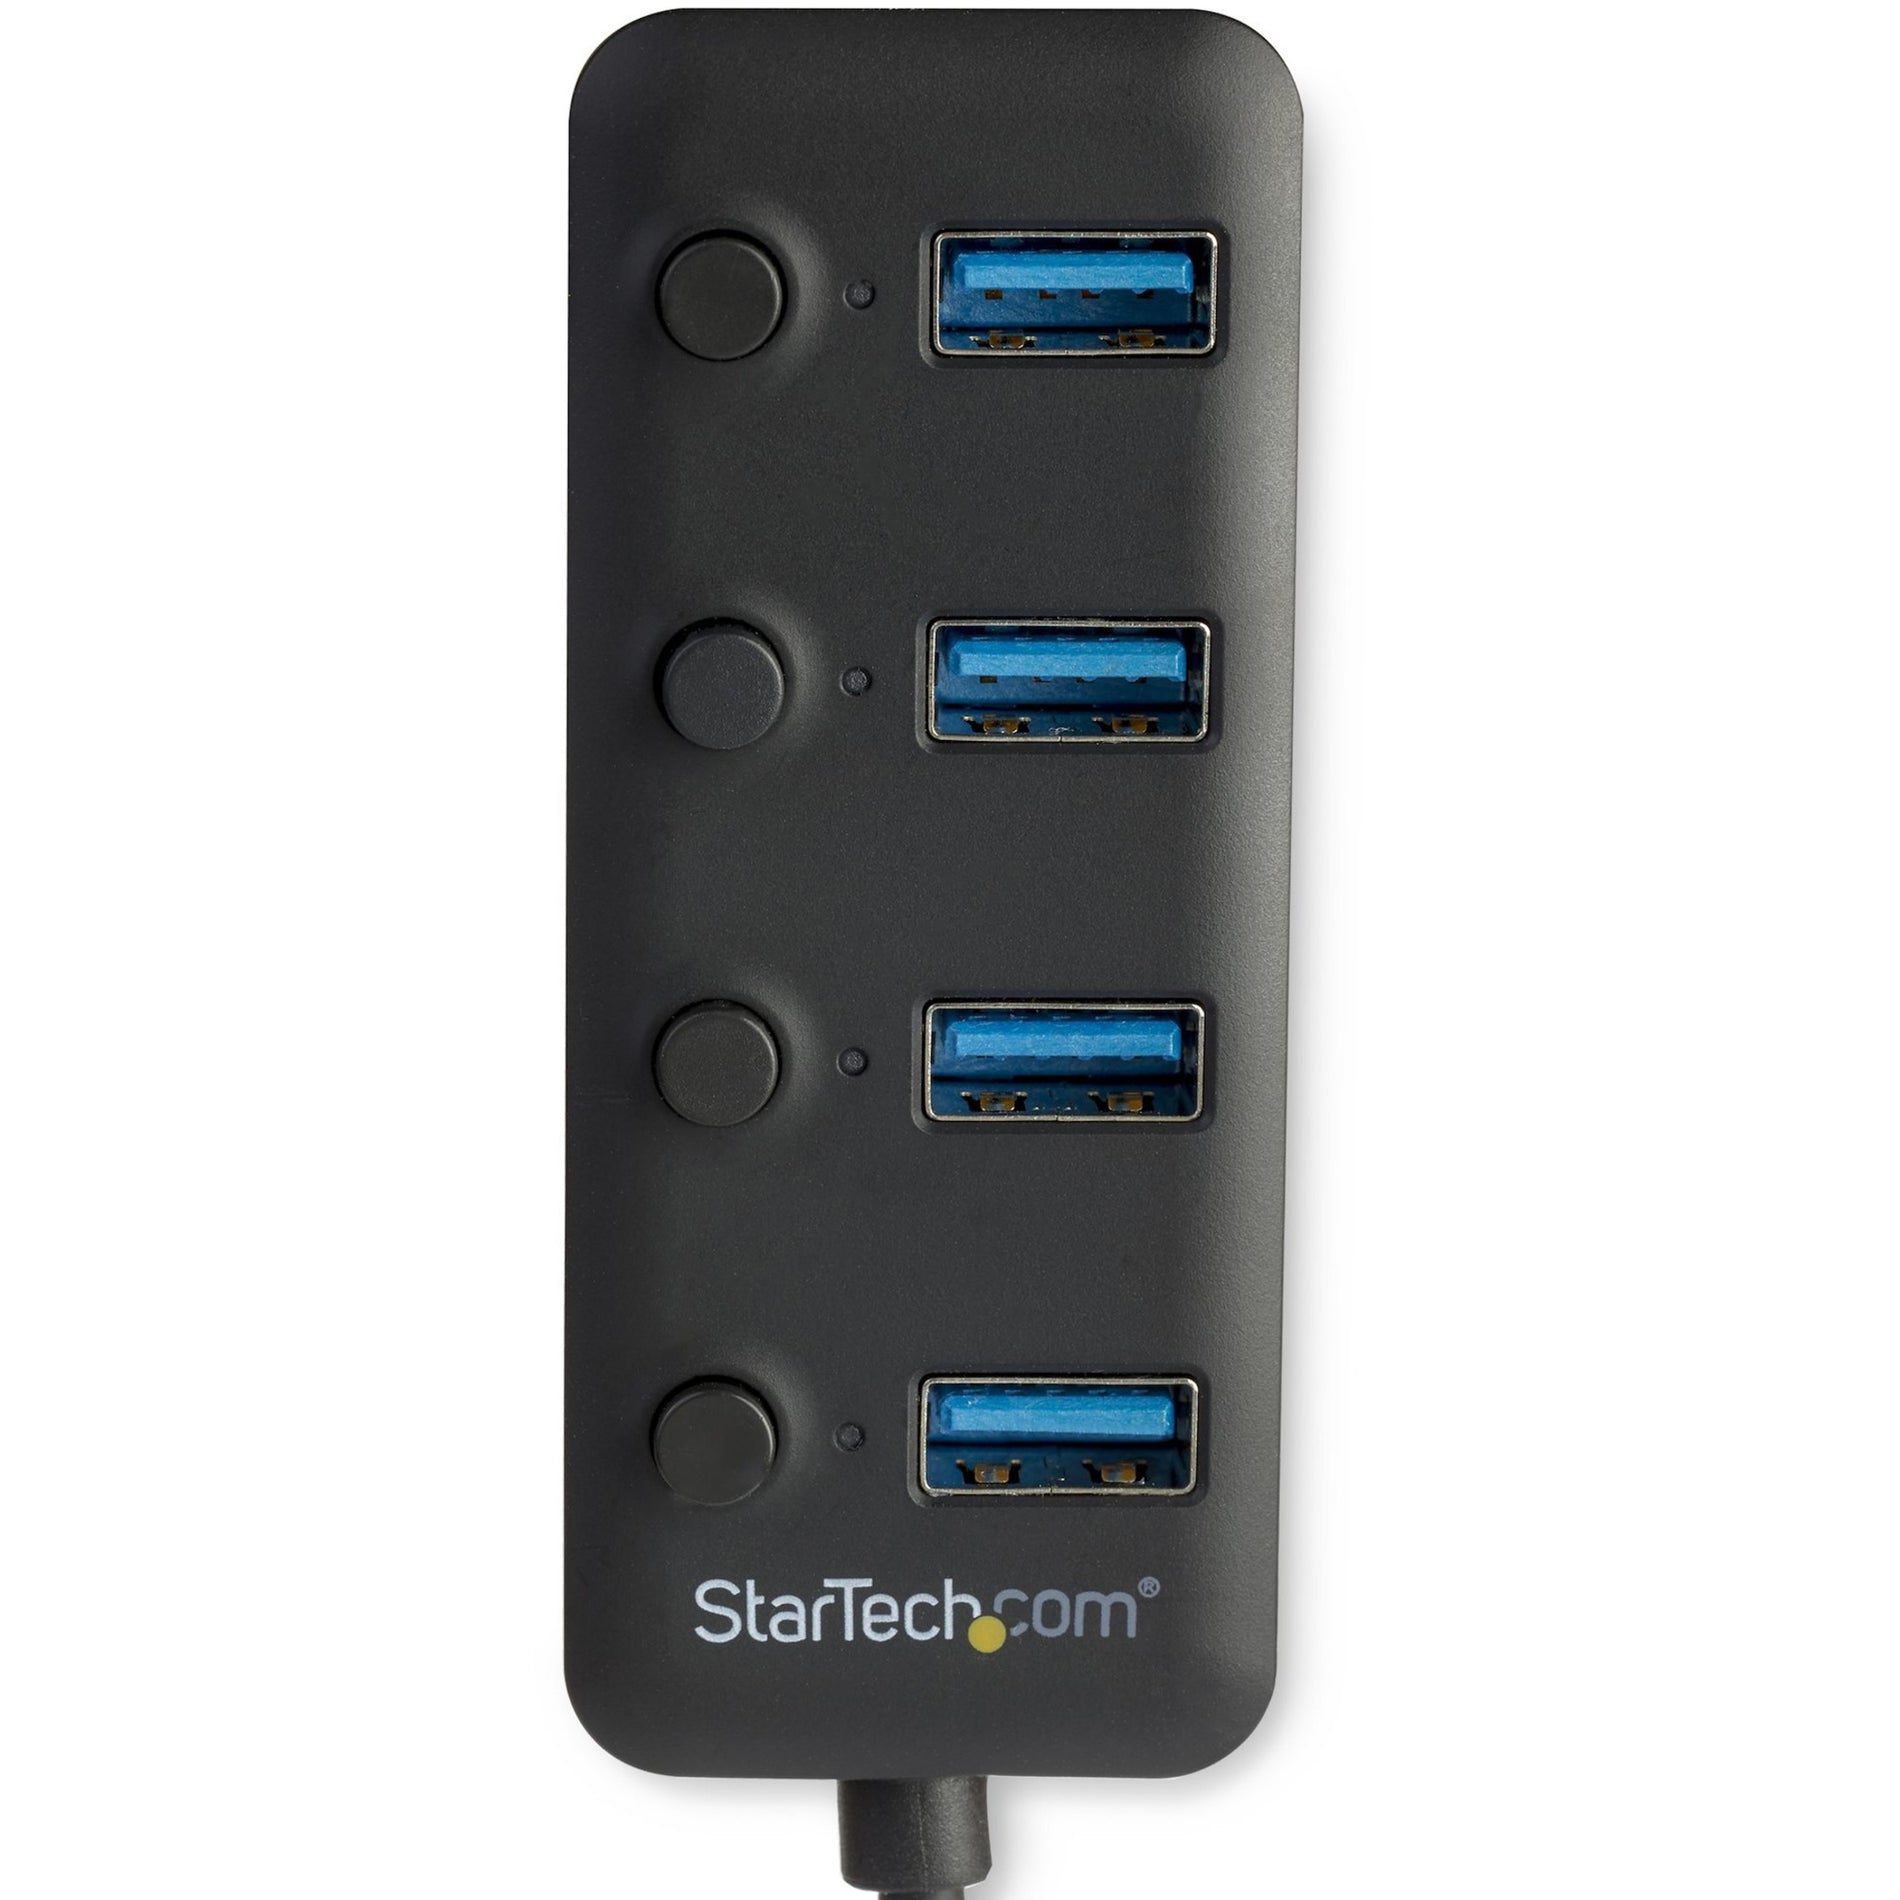 StarTech.com HB30A4AIB 4-Port USB 3.0 Hub - Portable USB 3.0 Port Expander, Individual On/Off Switches